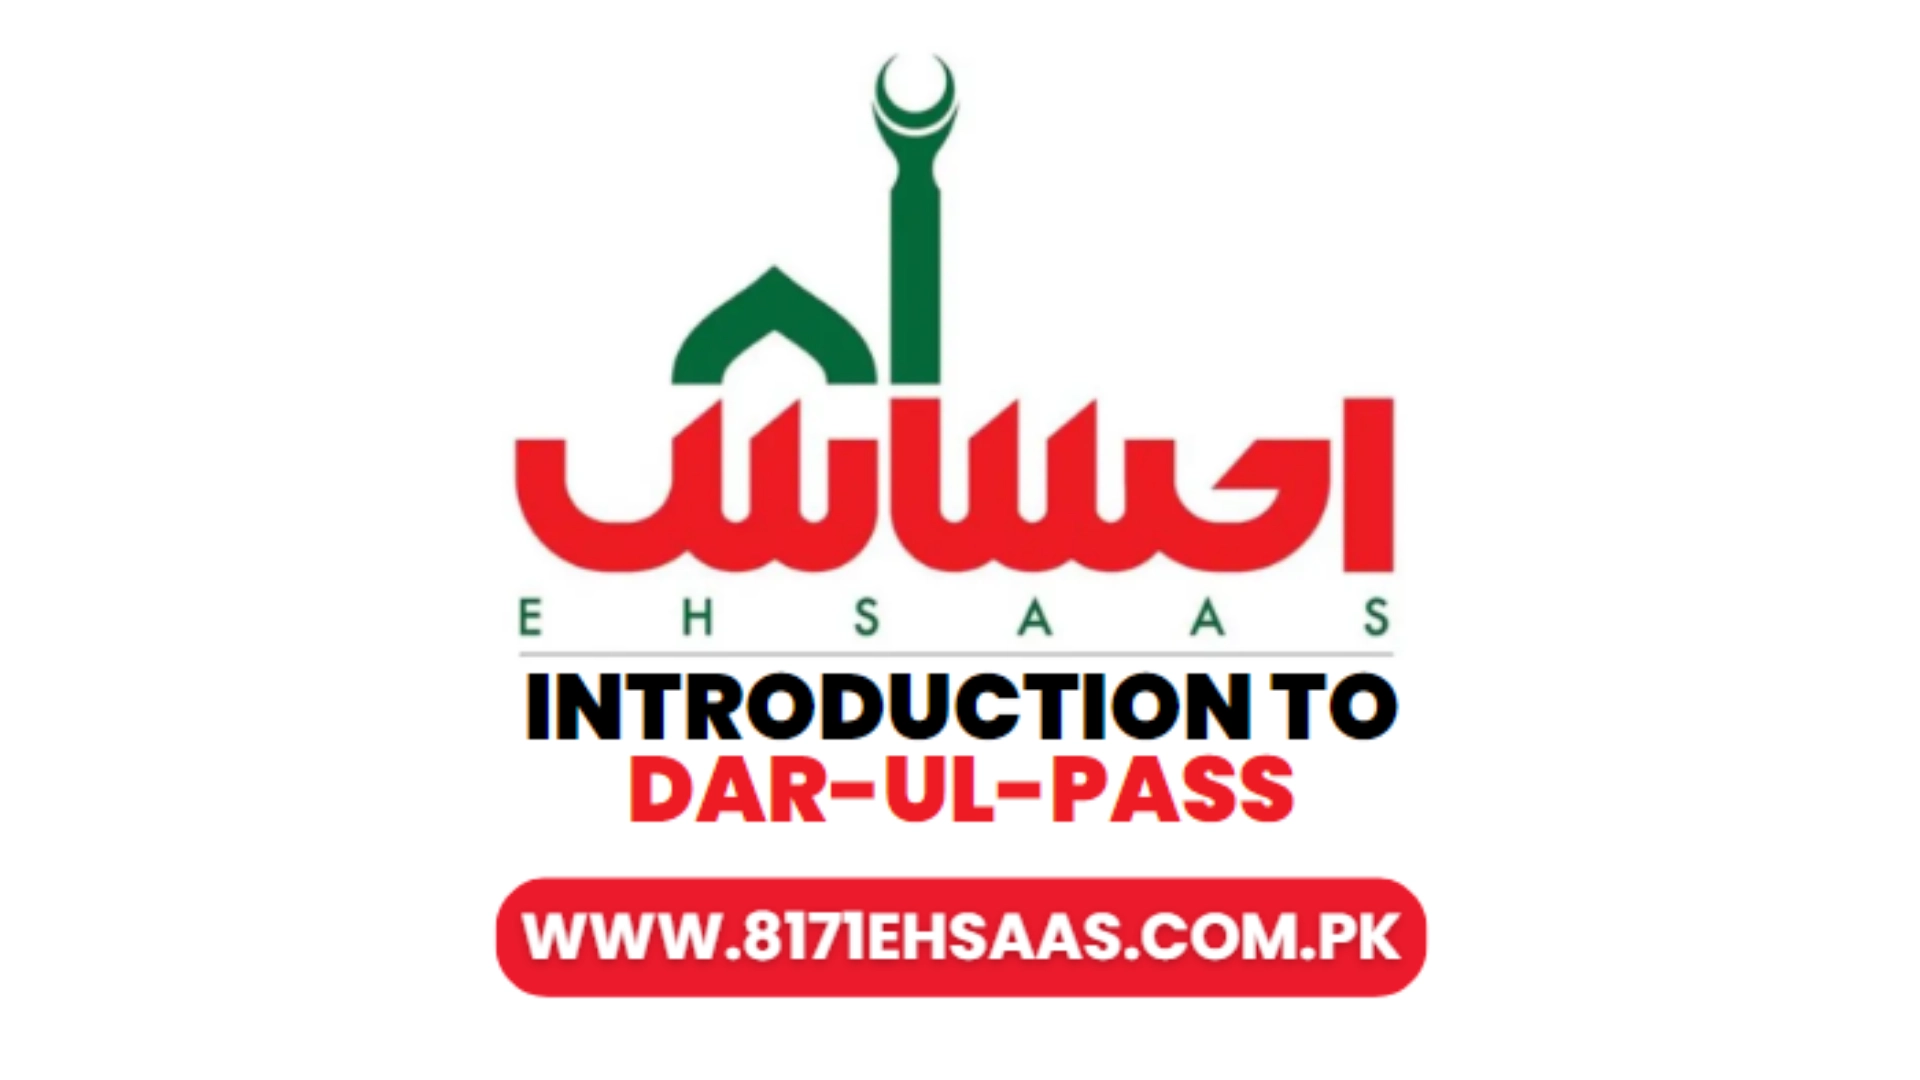 Introduction to Dar-ul-Pass